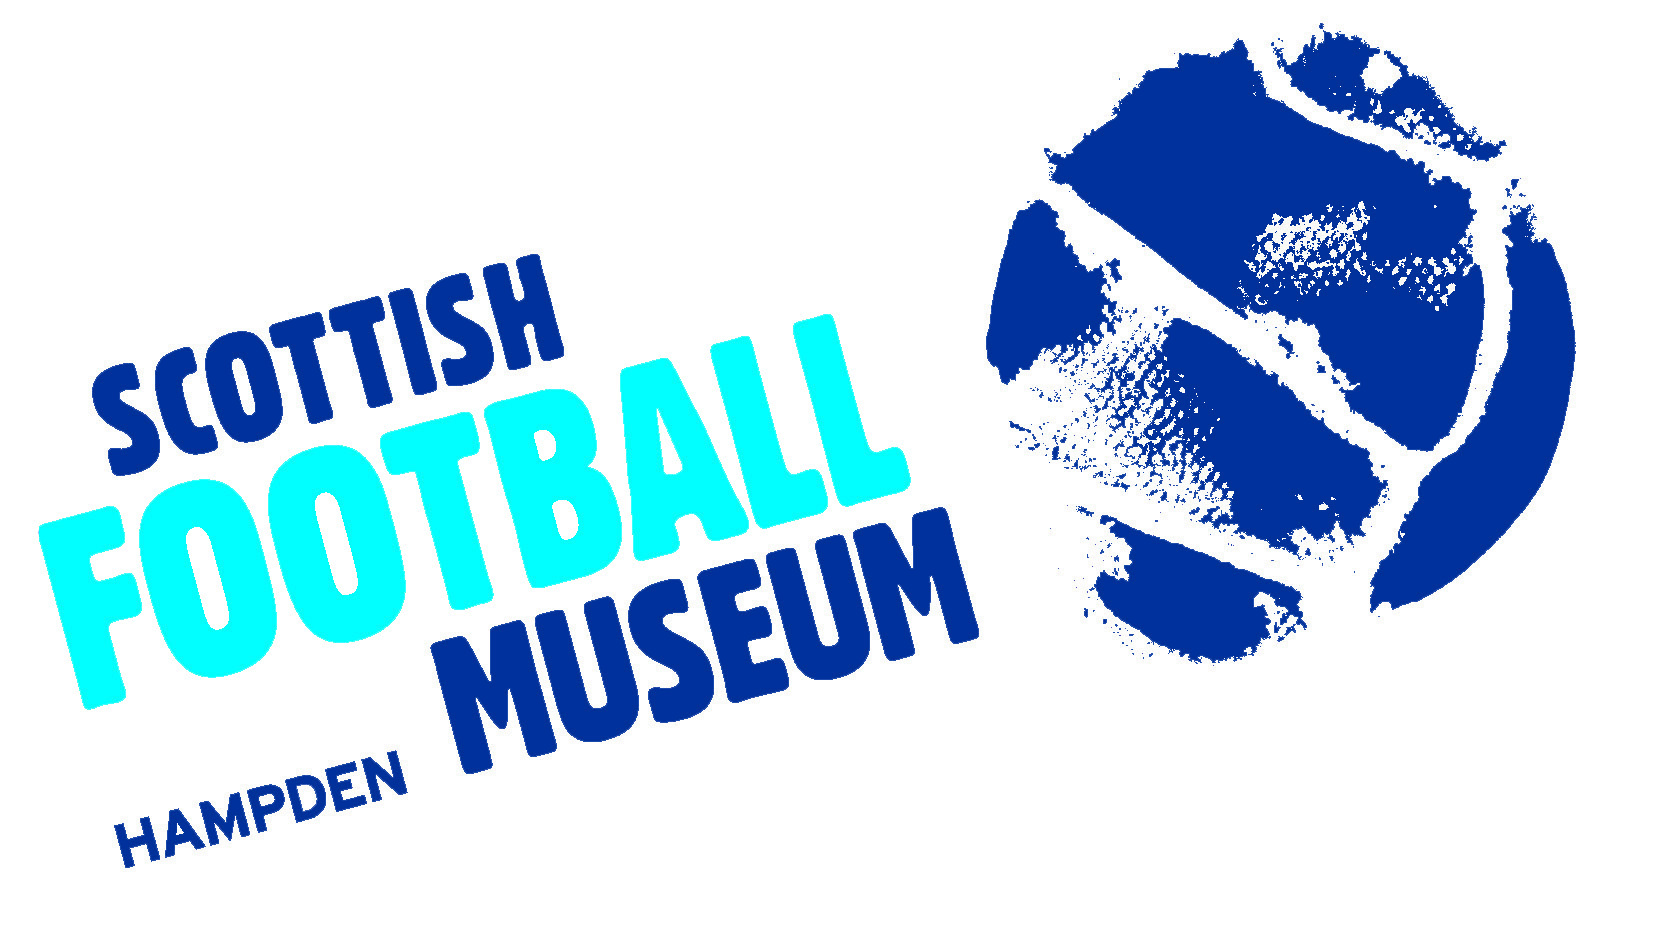 www.scottishfootballmuseum.org.uk